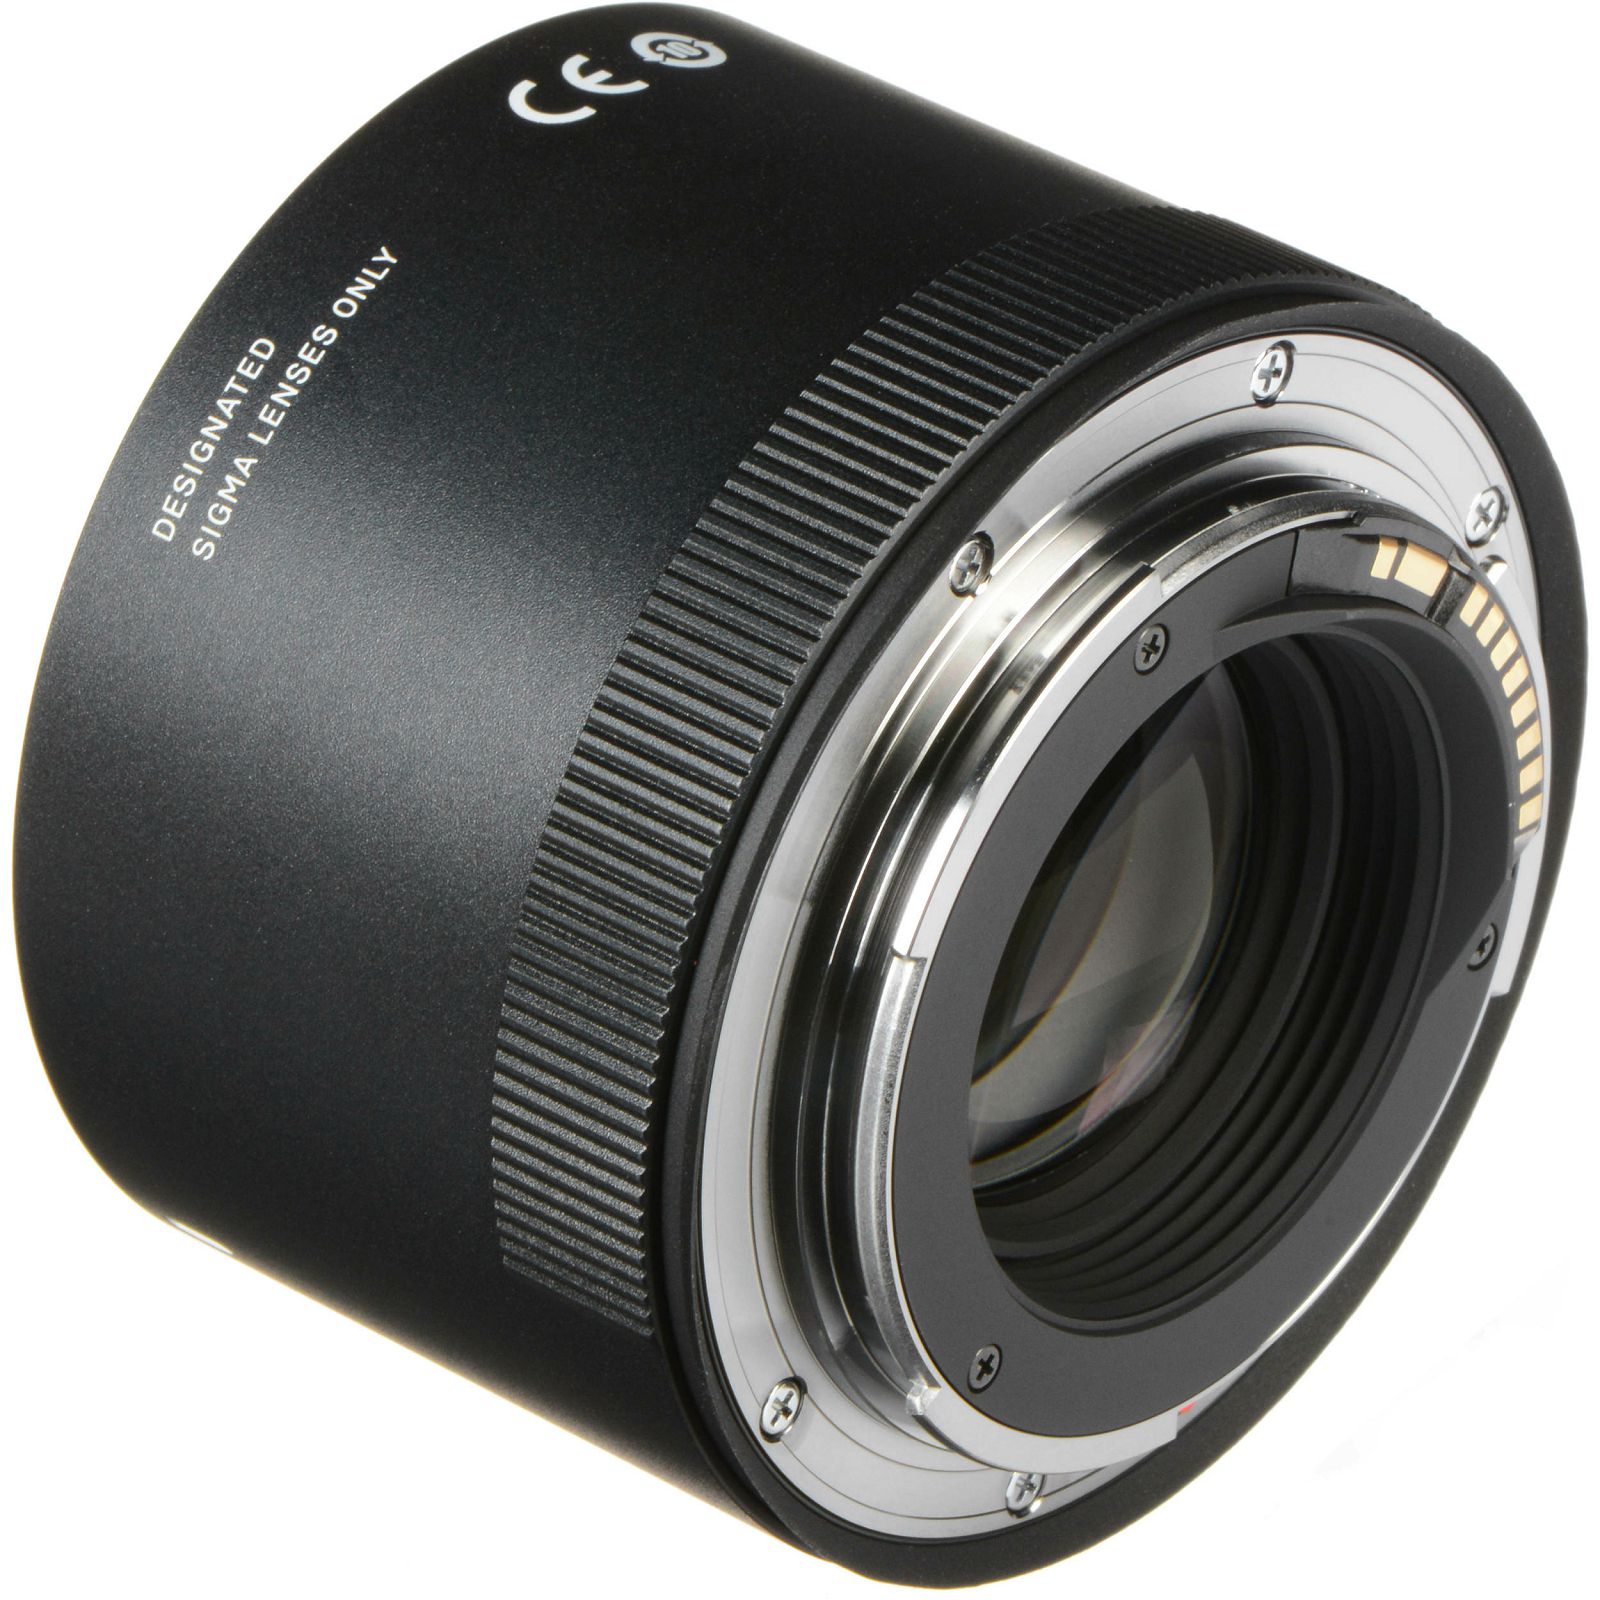 Sigma TC-2001 2x Telekonverter za Canon EF i EF-S objektive Teleconverter (870954)